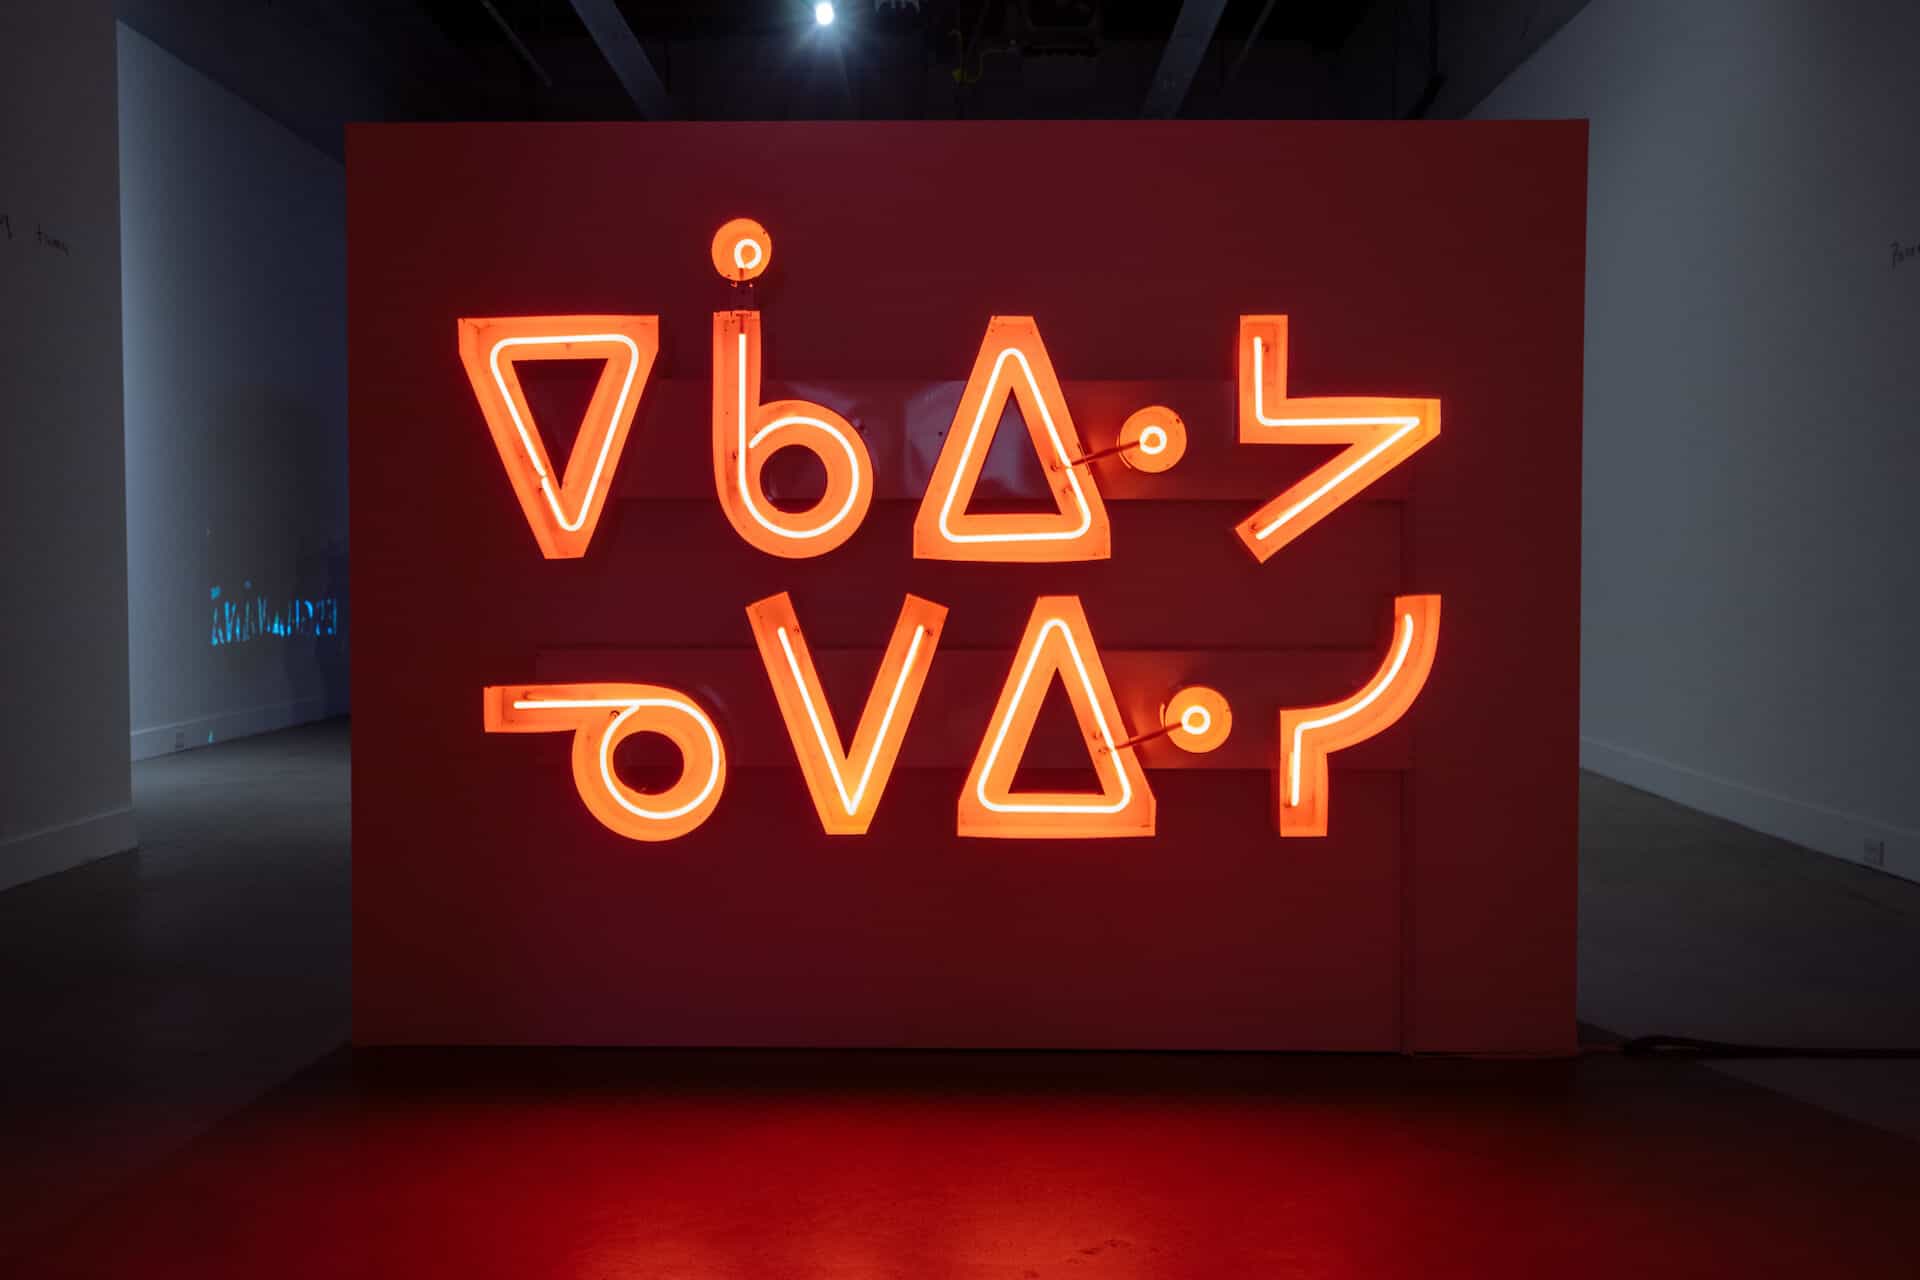 Joi T. Arcand, "ēkāwiya nēpēwisi (don’t be shy)", neon channel sign, 2017. Photo by Elyse Bouvier.